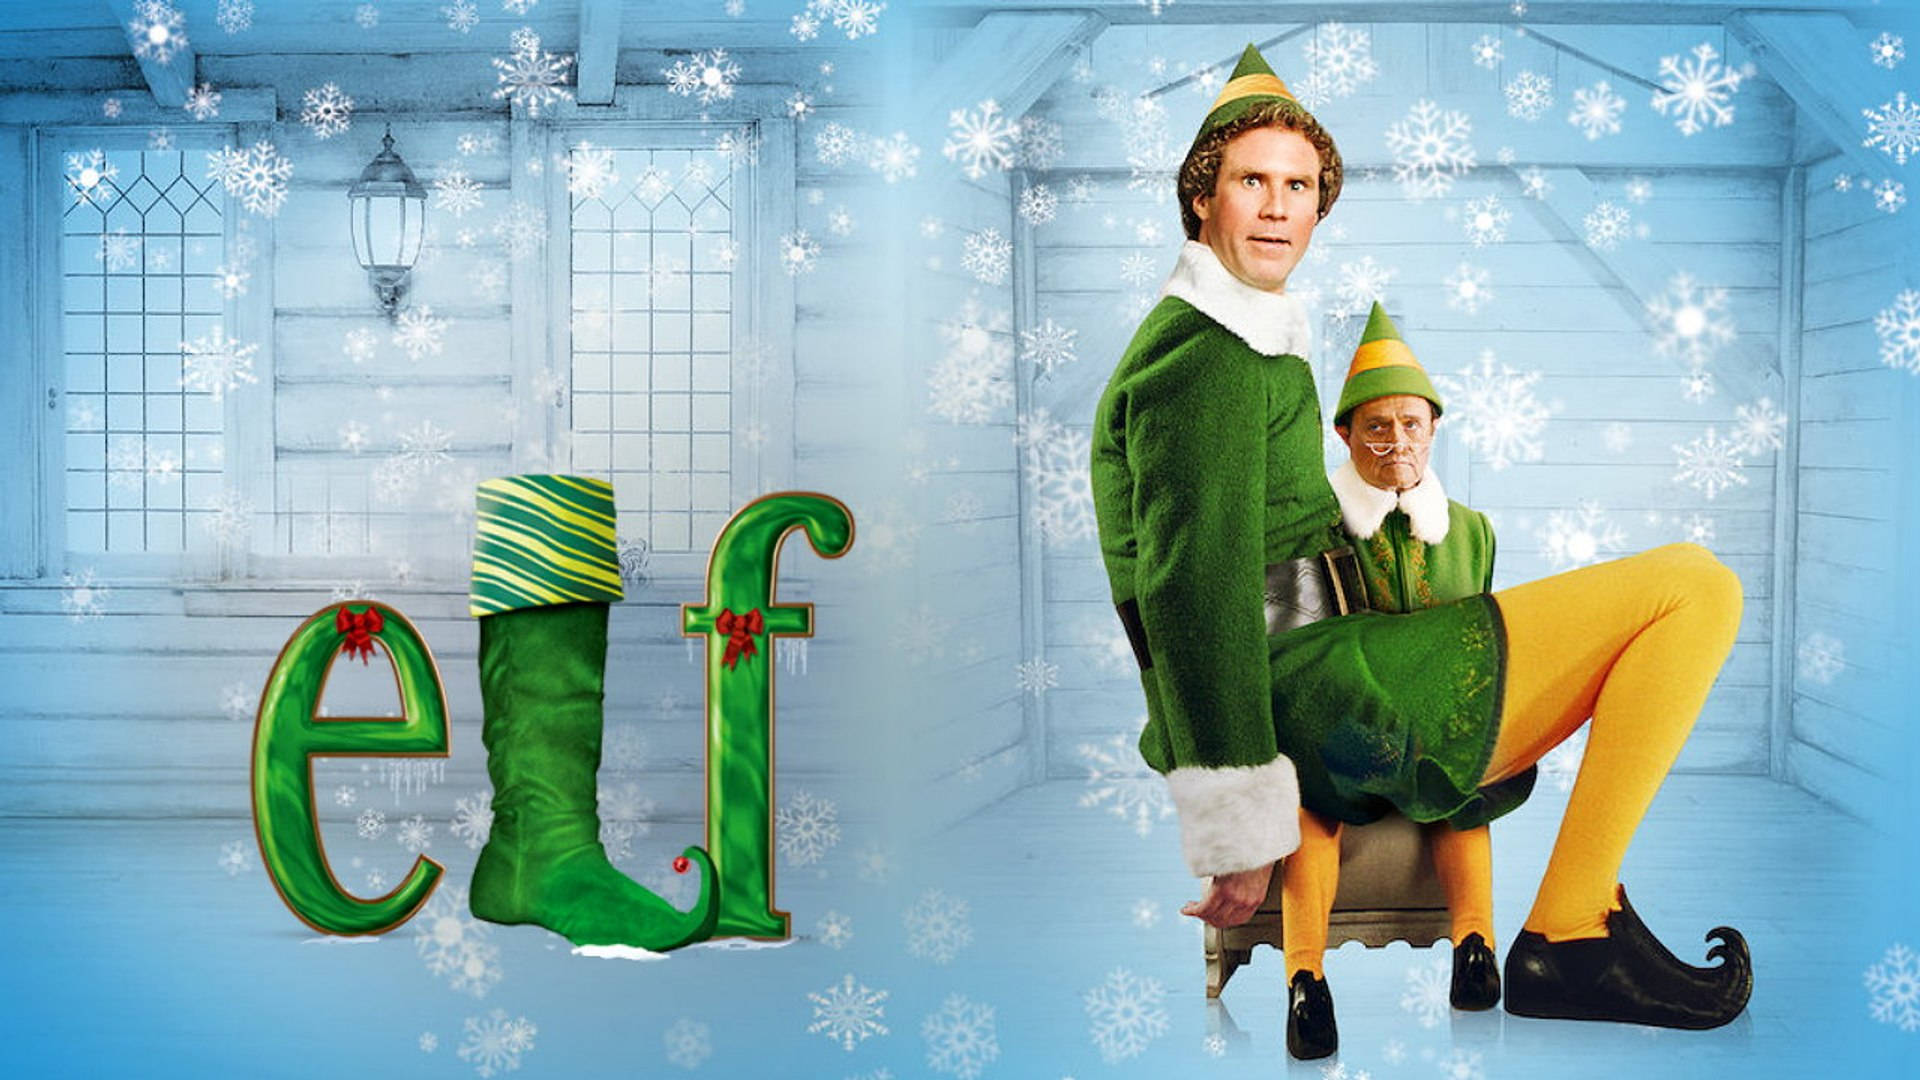 Elf The Movie Wallpaper Wallpaper